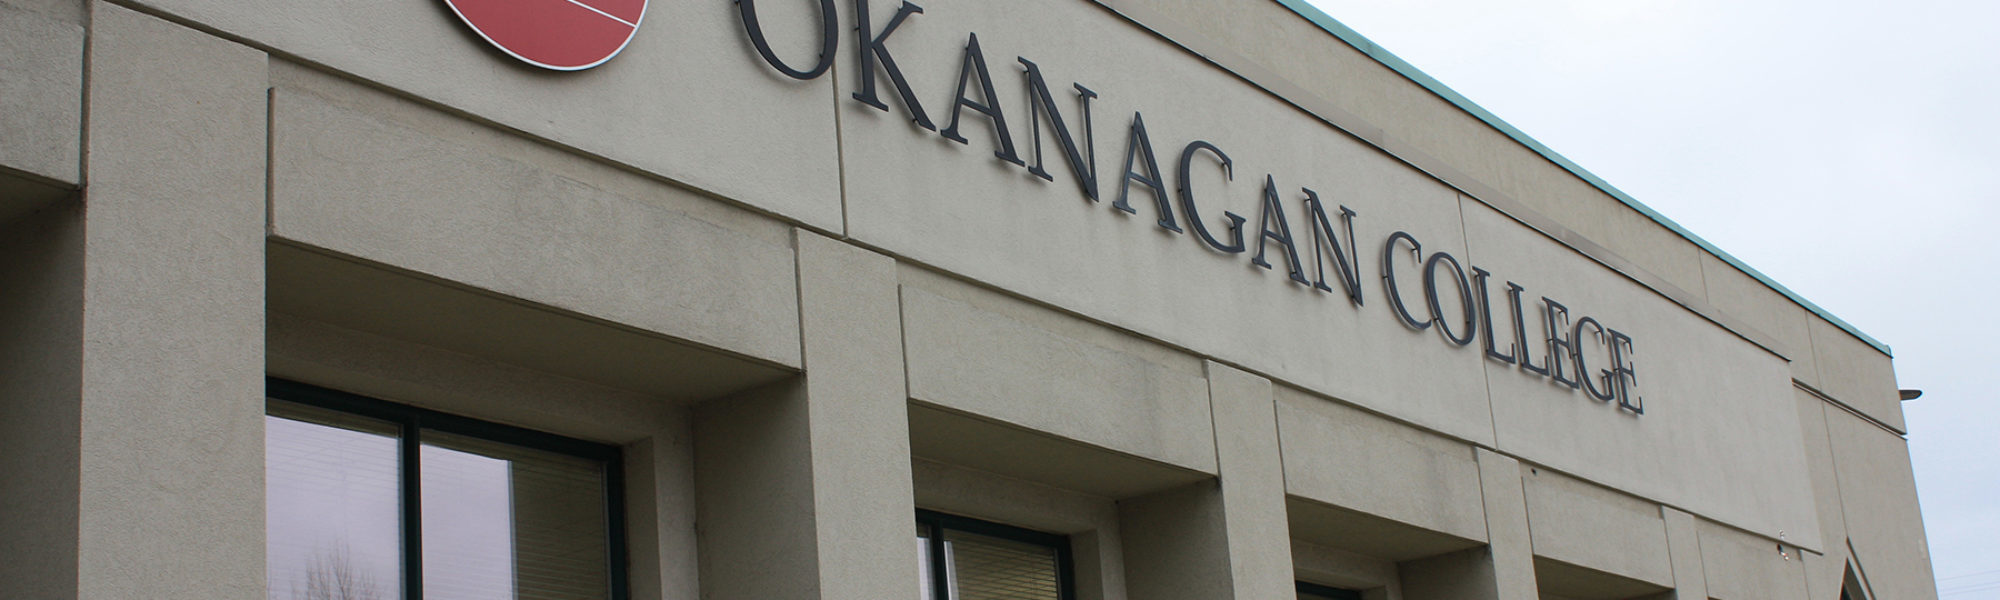 Study in Okanagan College Canada